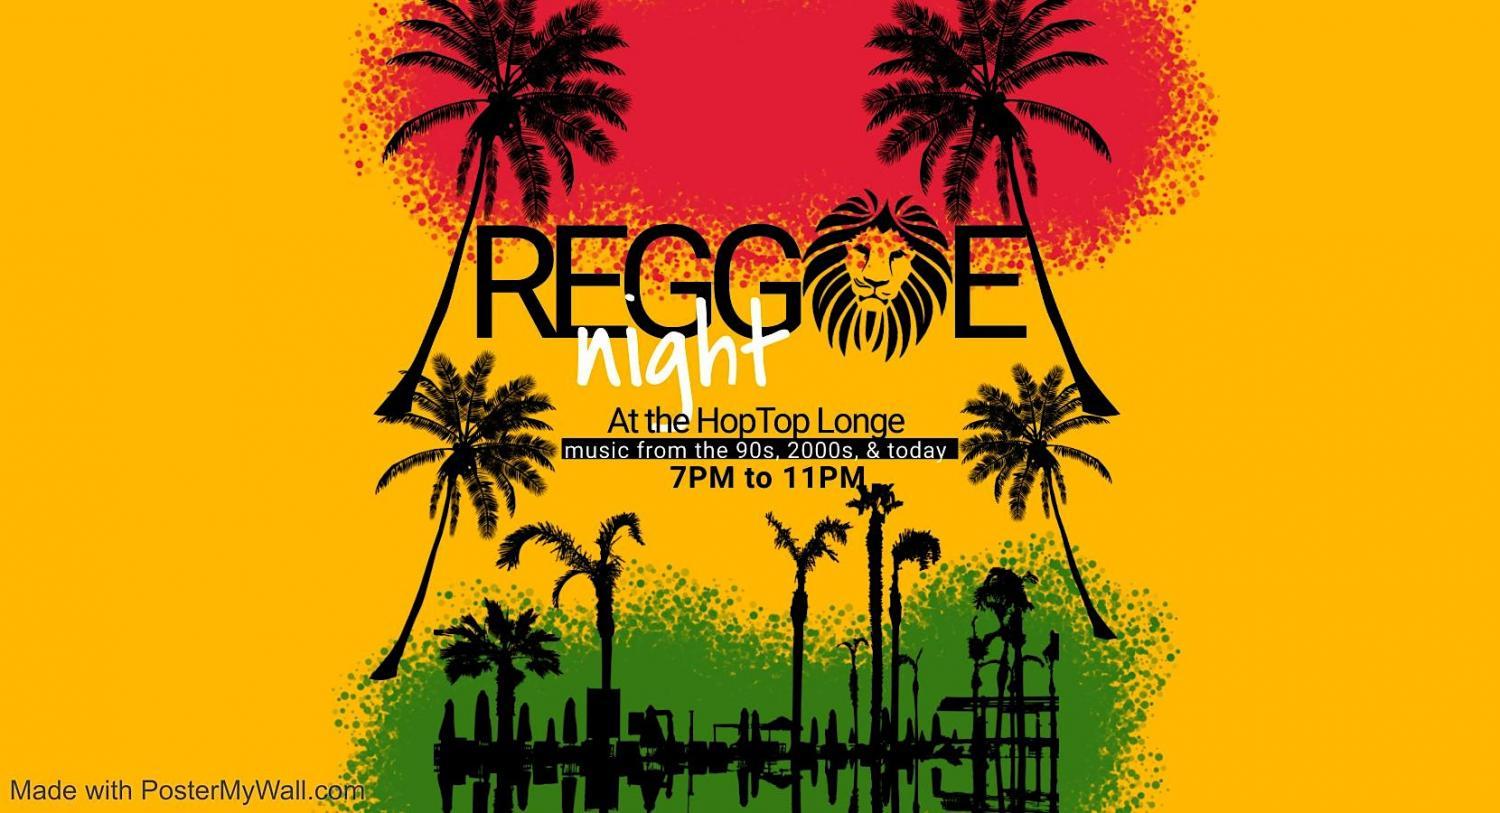 Sunday Funday: Reggae Music Night
Sun Oct 23, 7:00 PM - Sun Oct 23, 11:00 PM
in 4 days